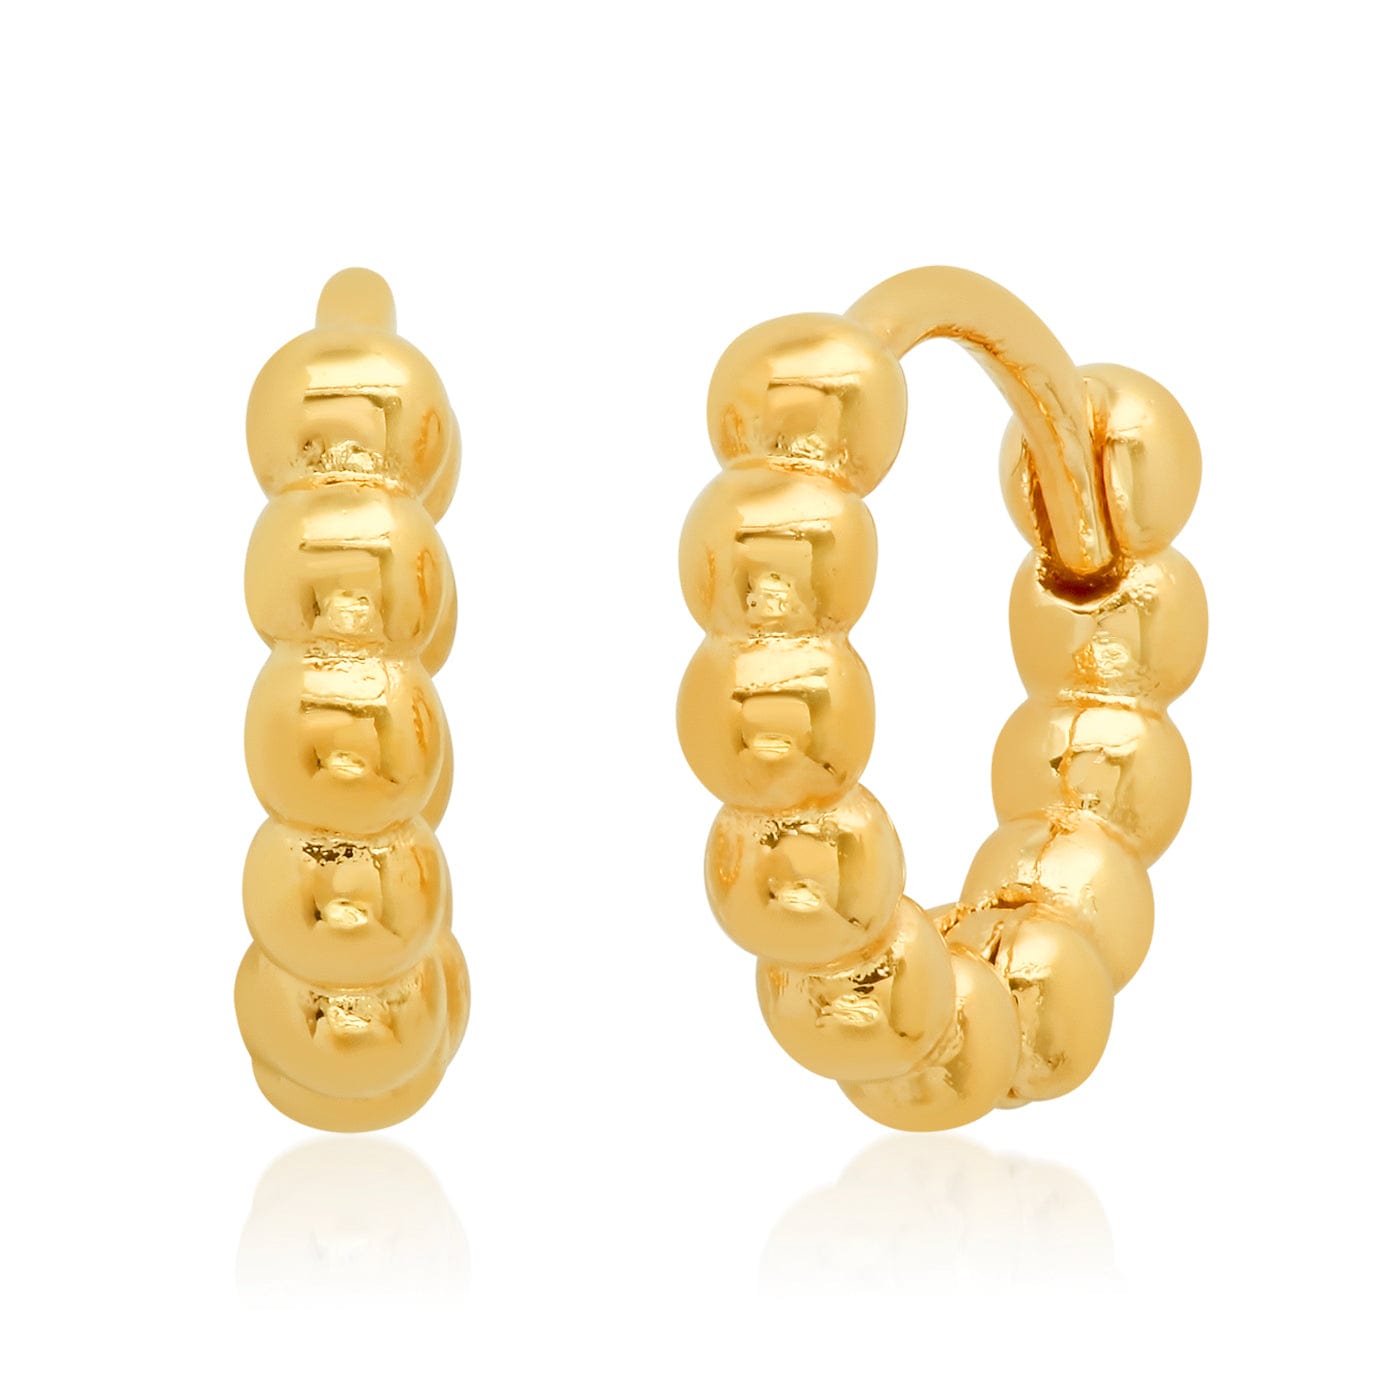 TAI JEWELRY Earrings Small Gold Ball Huggie Earrings